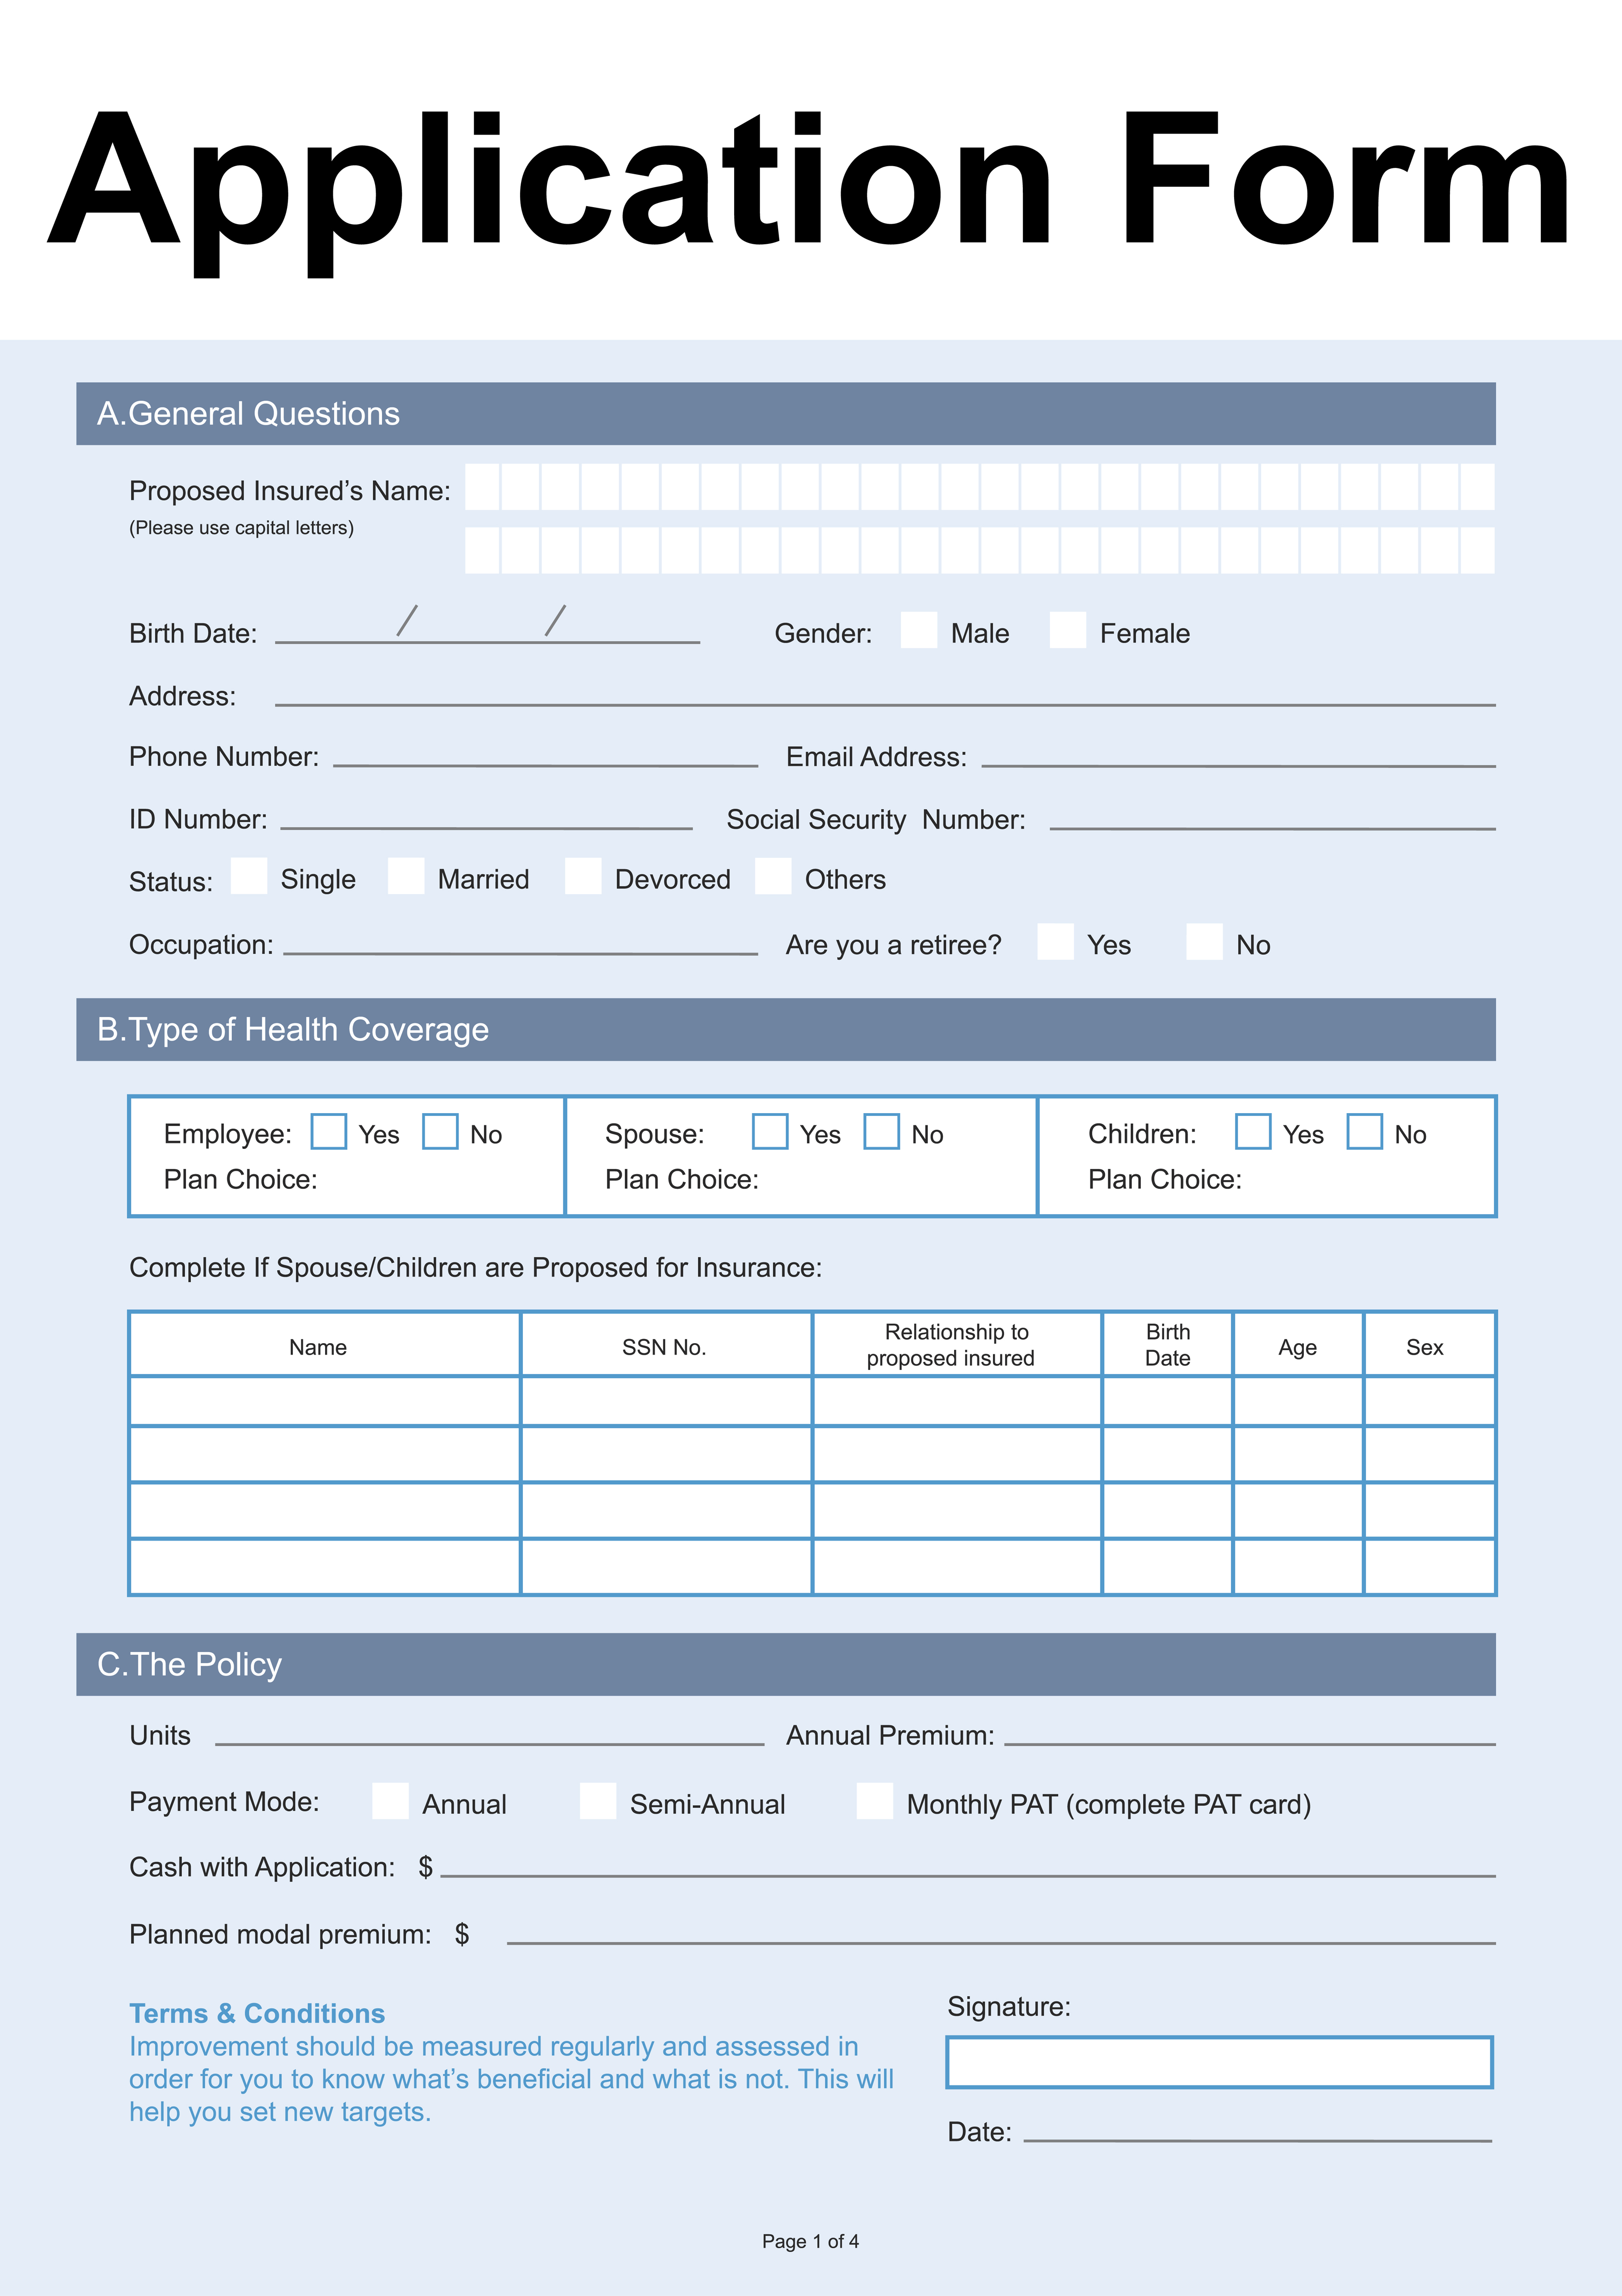 Applicant Form Vector - (20589 Gratis-Downloads) .